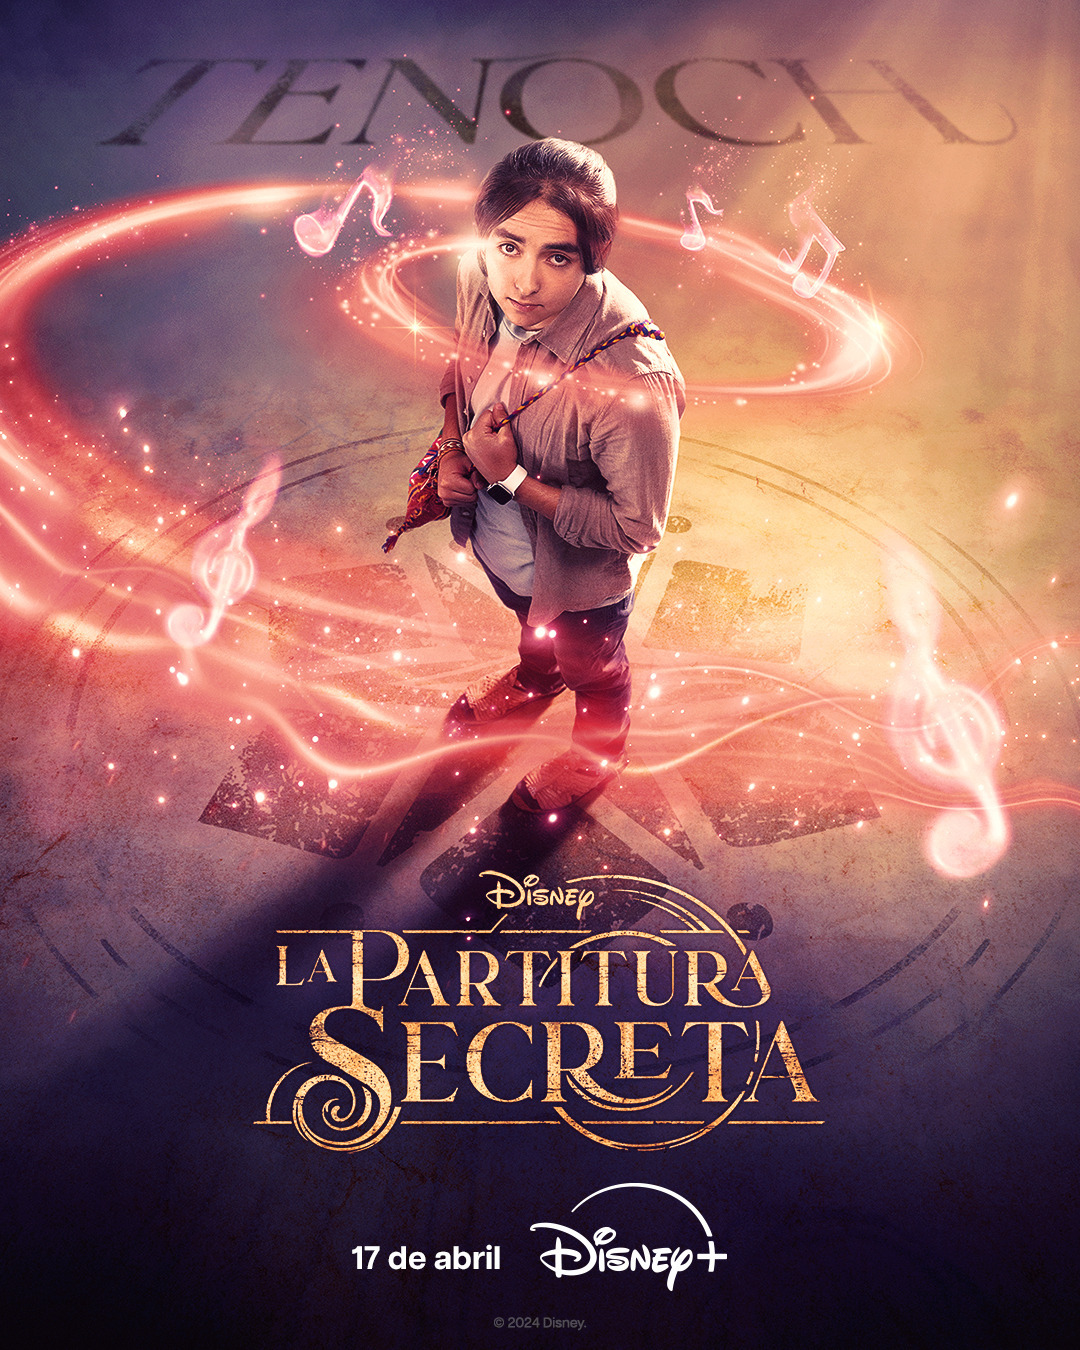 Extra Large TV Poster Image for La partitura secreta (#5 of 7)